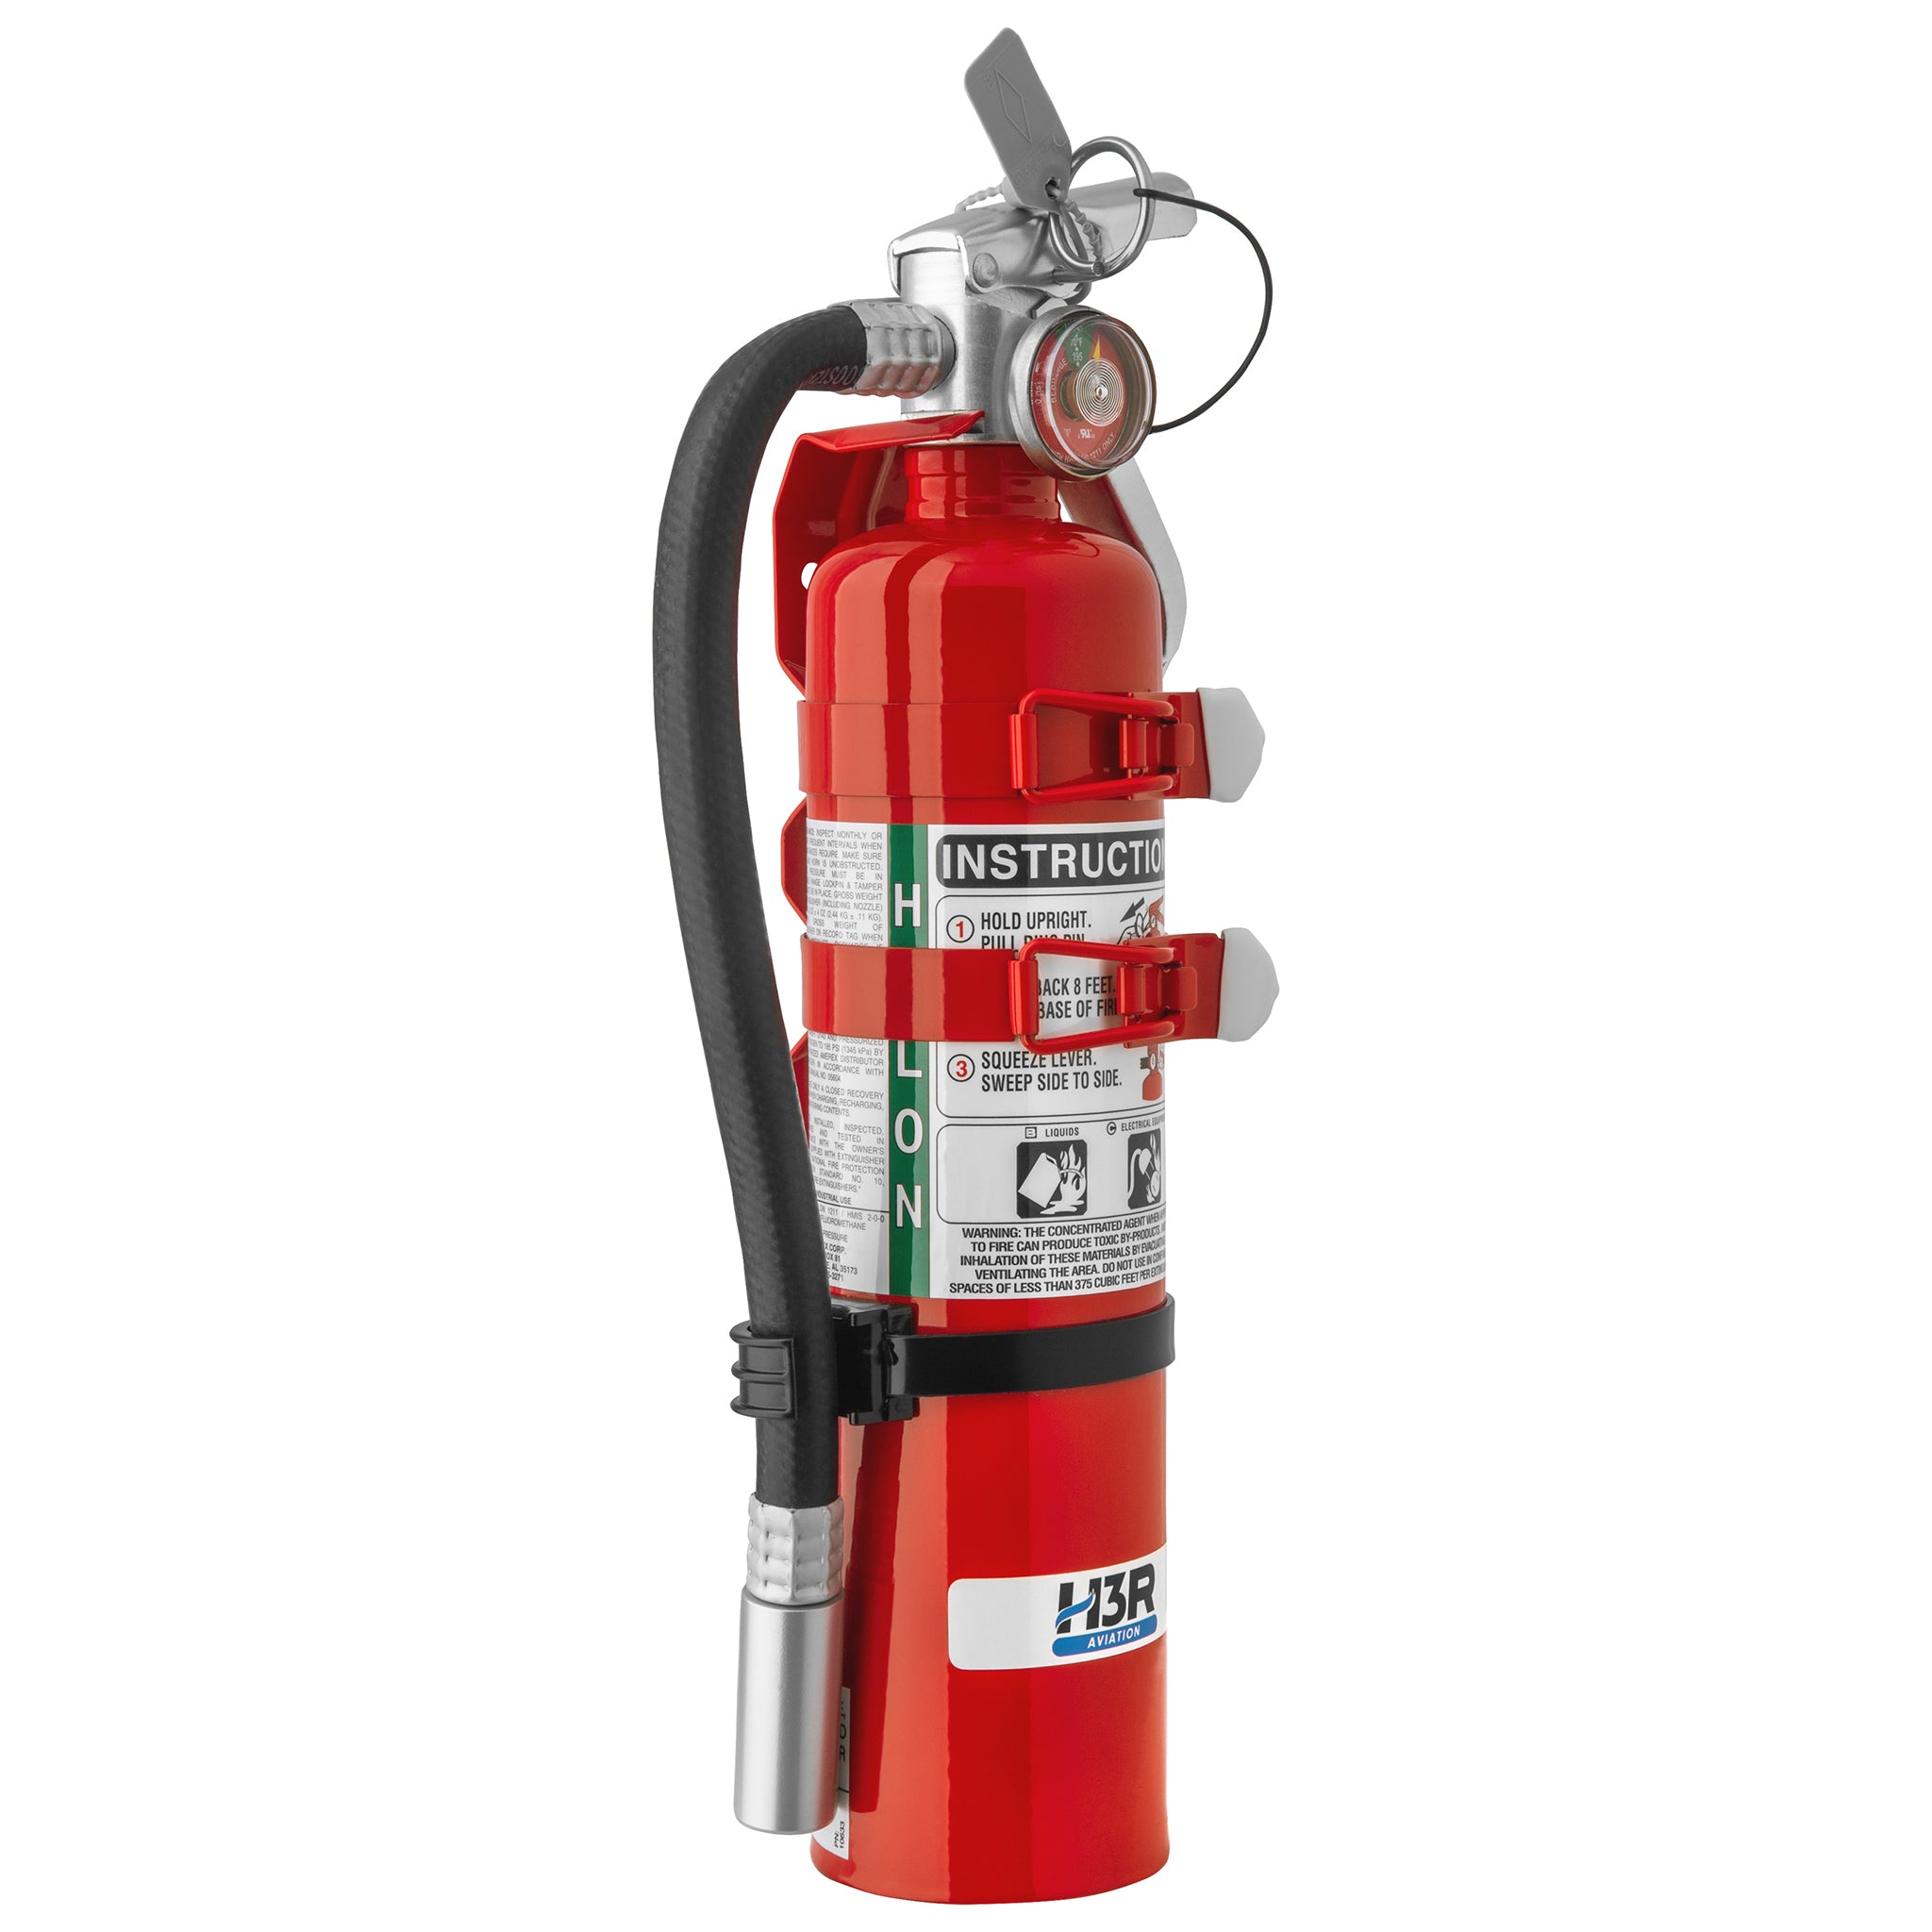 C354TS - 3.0 lb. Halon Fire Extinguisher